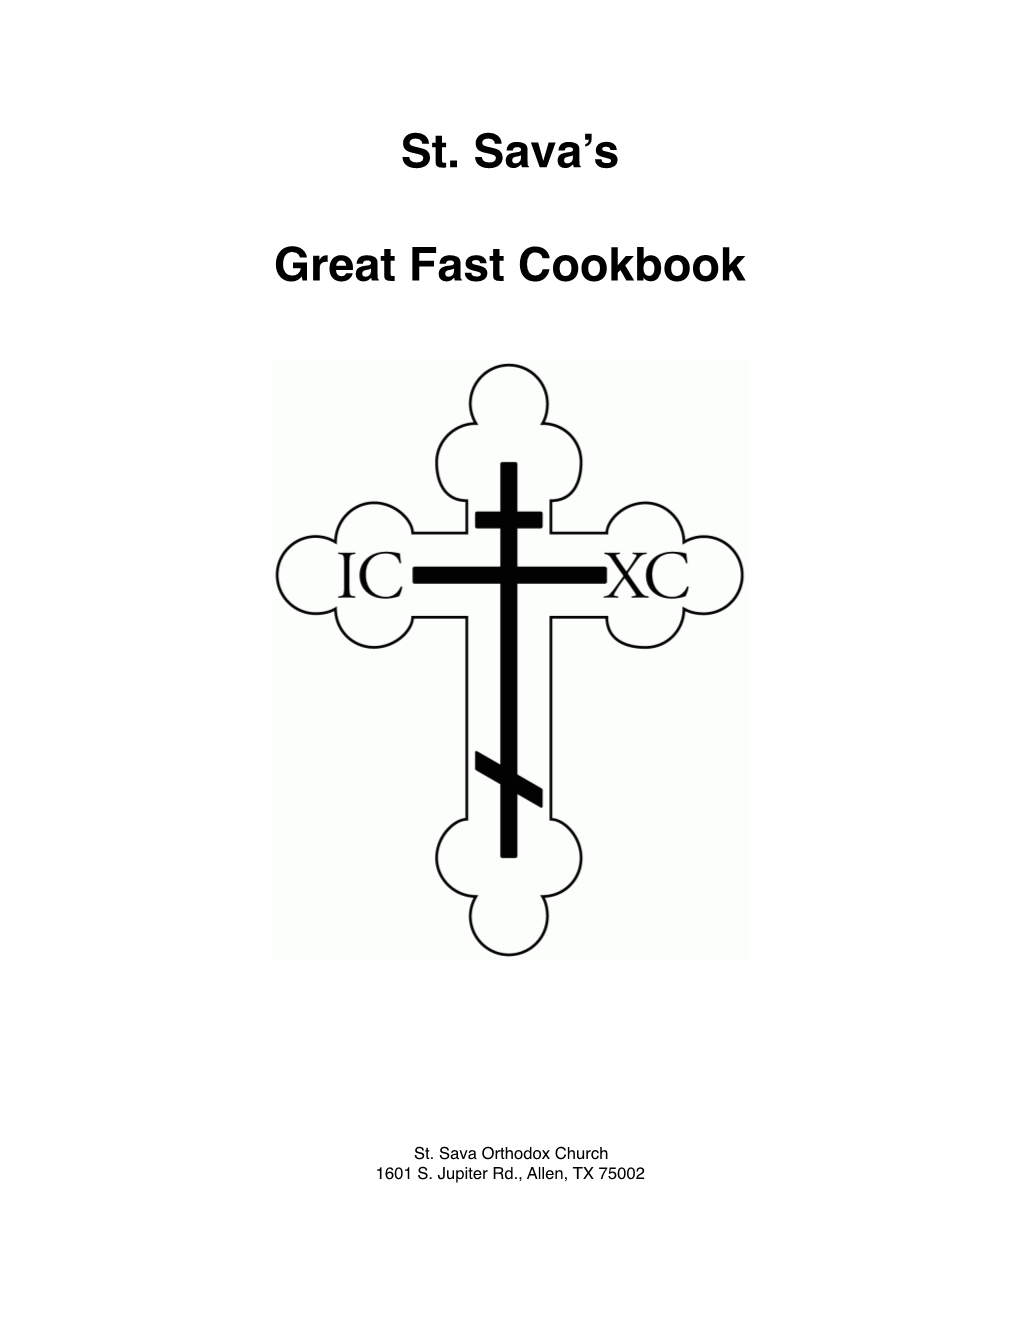 St. Sava Great Fast Cookbook